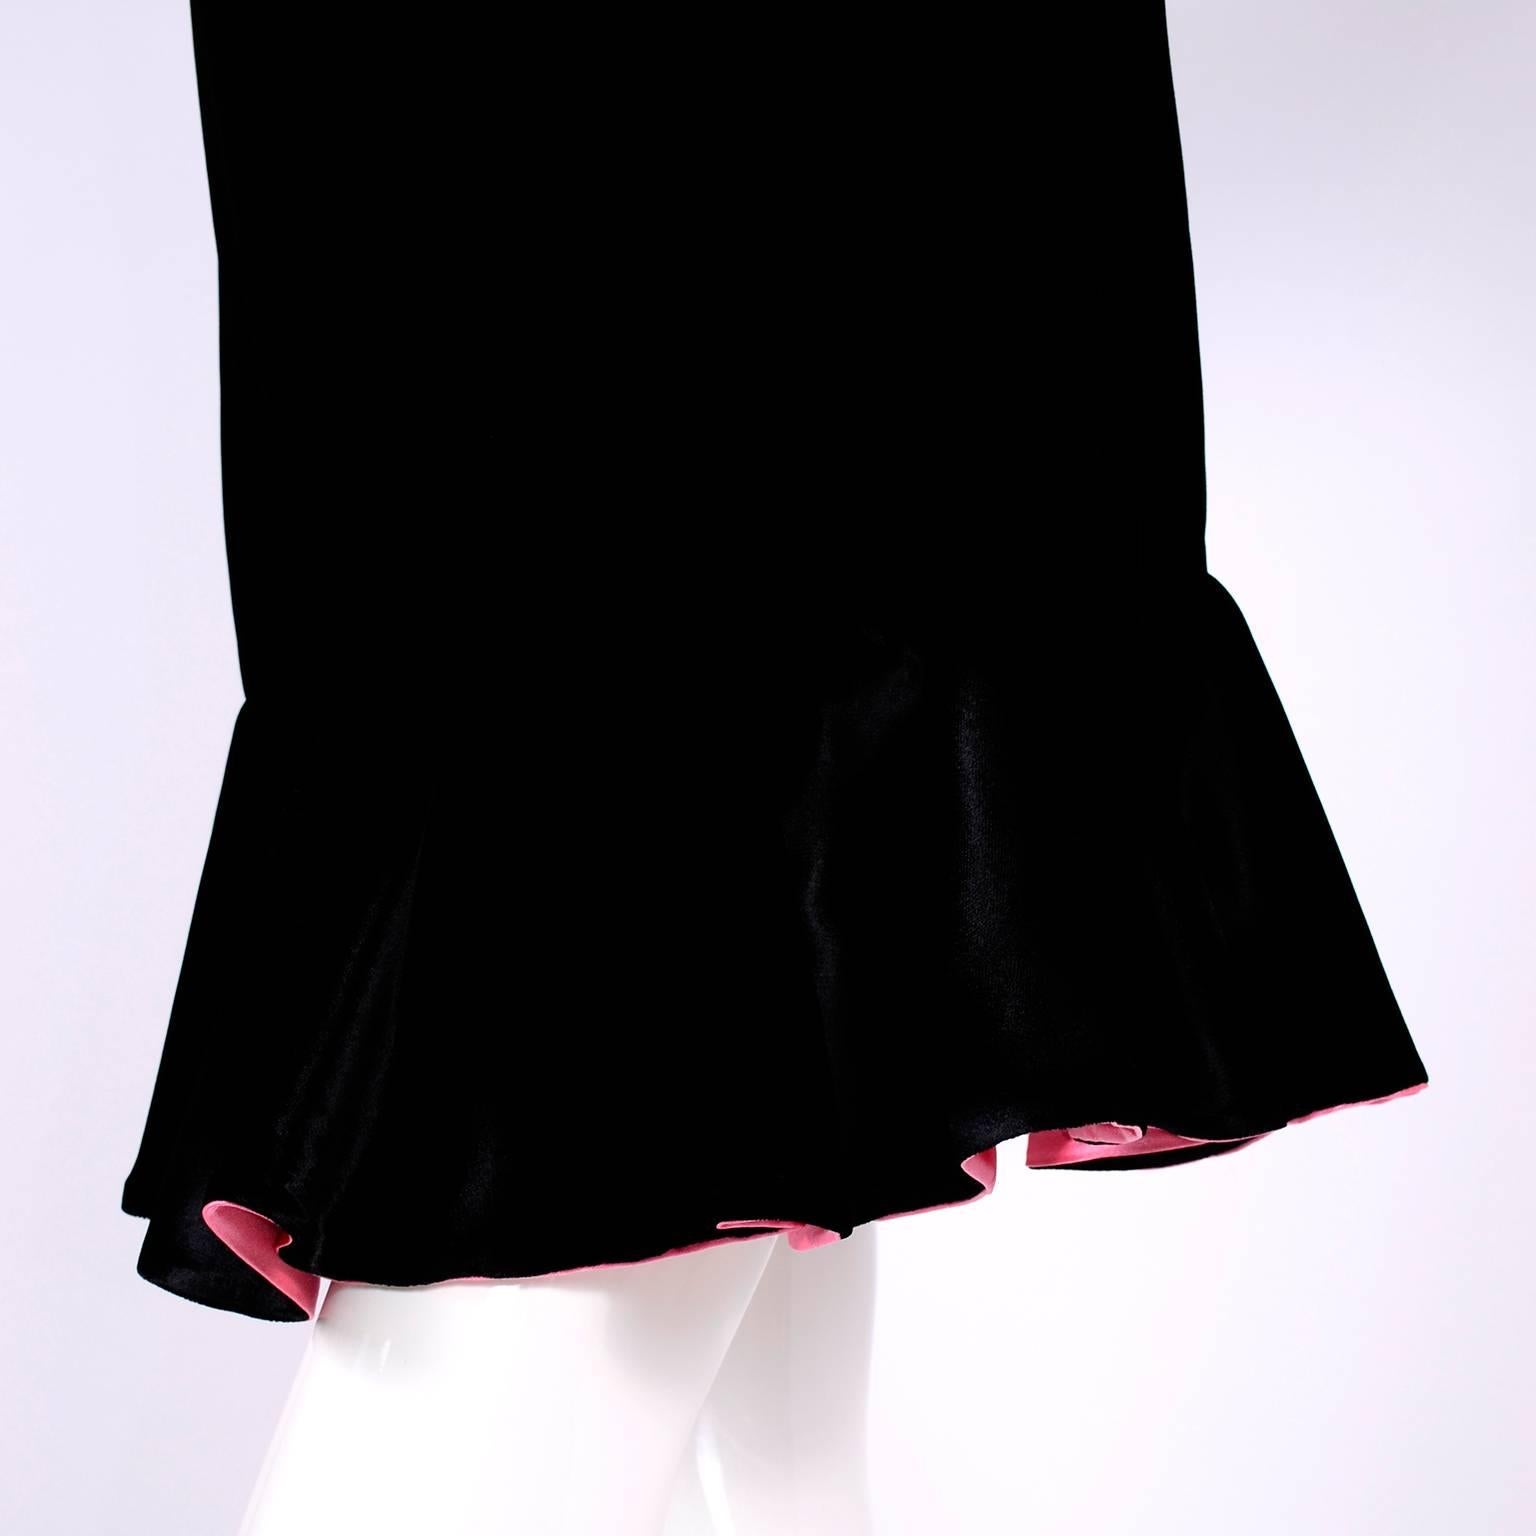 1980s Oscar de la Renta Vintage Dress in Black Velvet with Pink Satin Ruffles For Sale 4